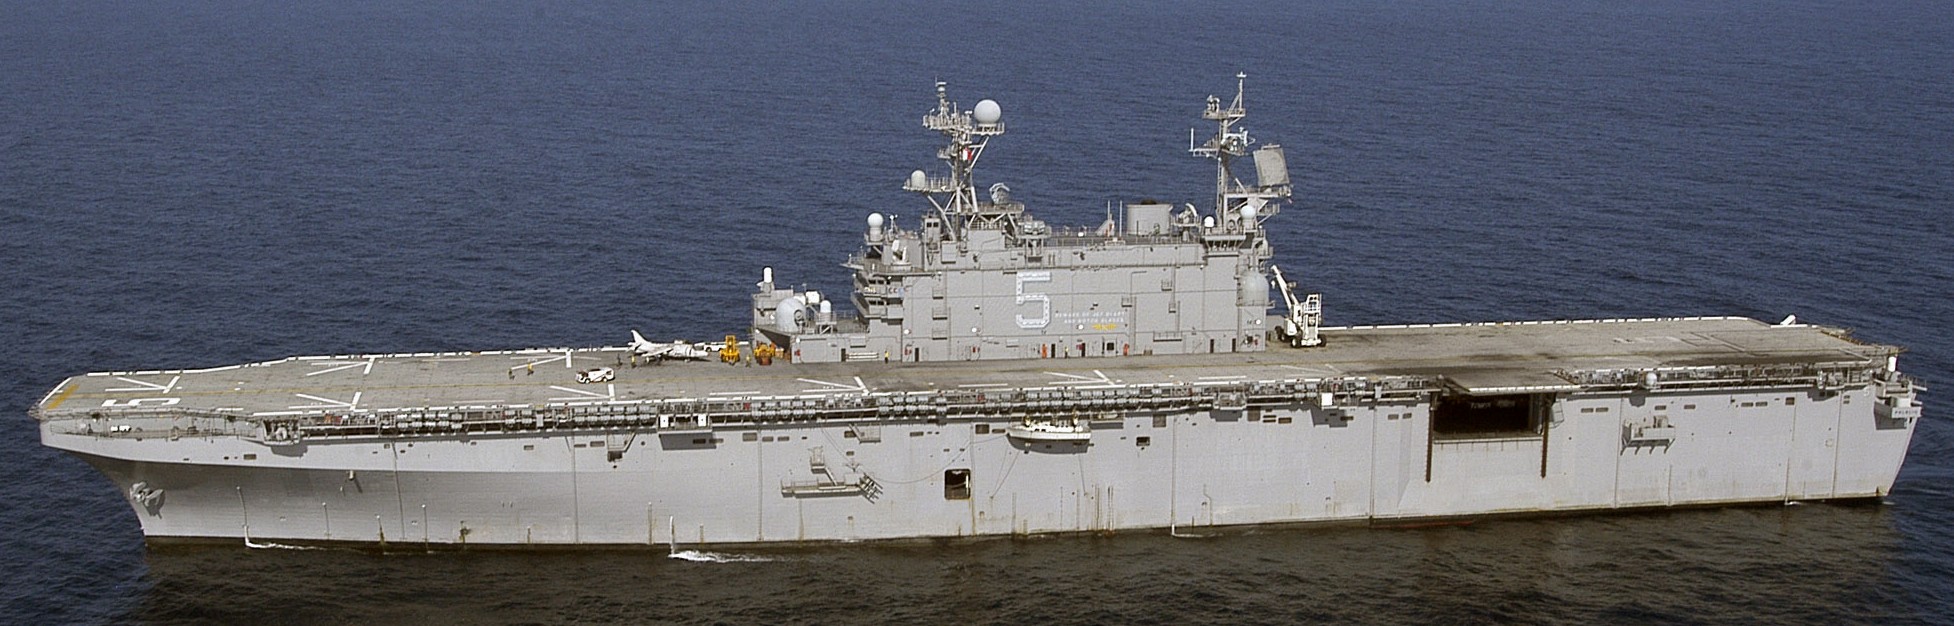 lha-5 uss peleliu tarawa class amphibious assault ship landing helicopter us navy pacific ocean 26